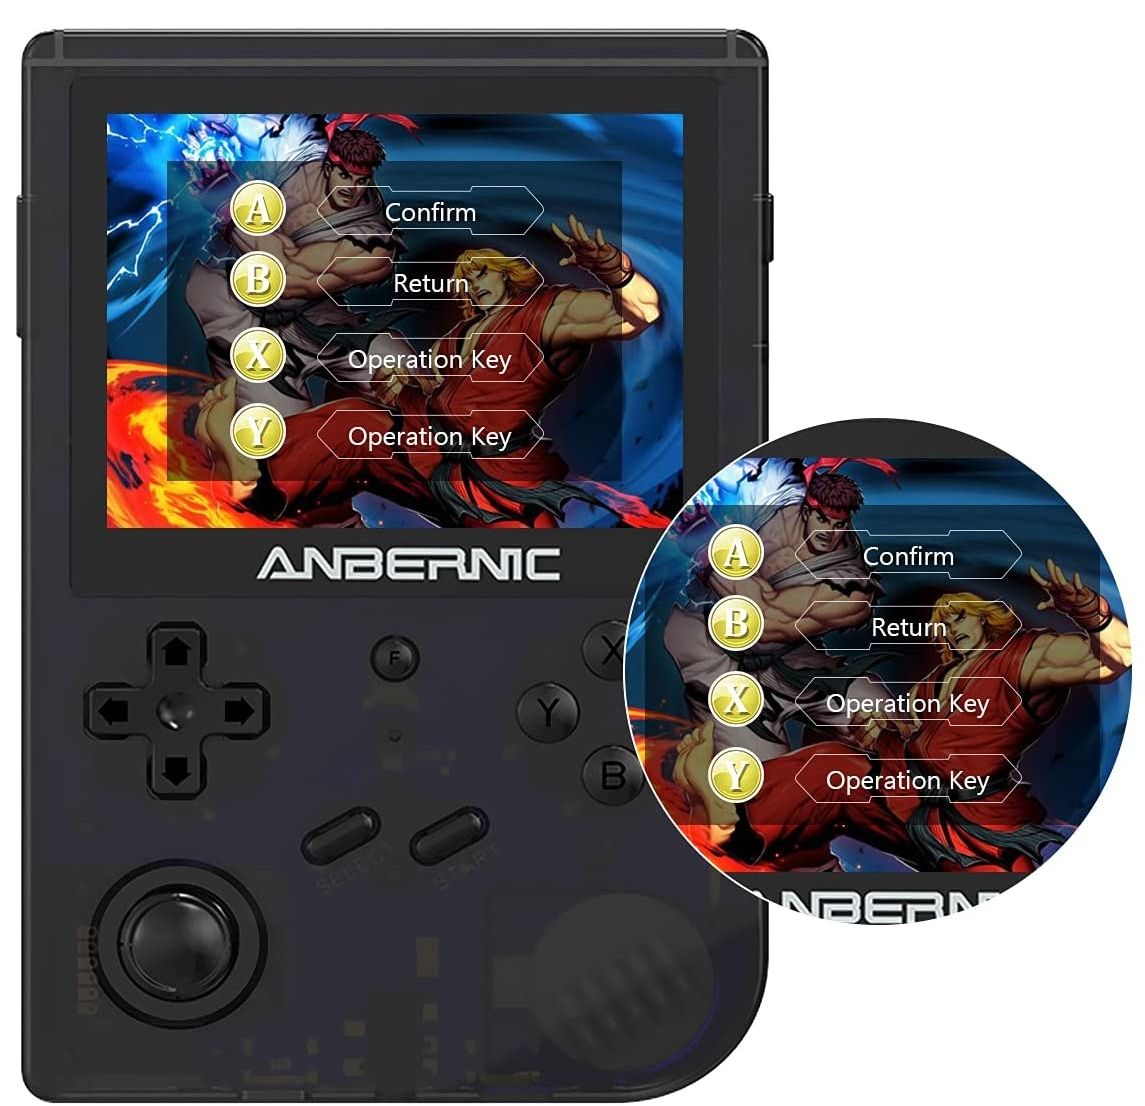 Anbernic RG351V Handheld Game Console